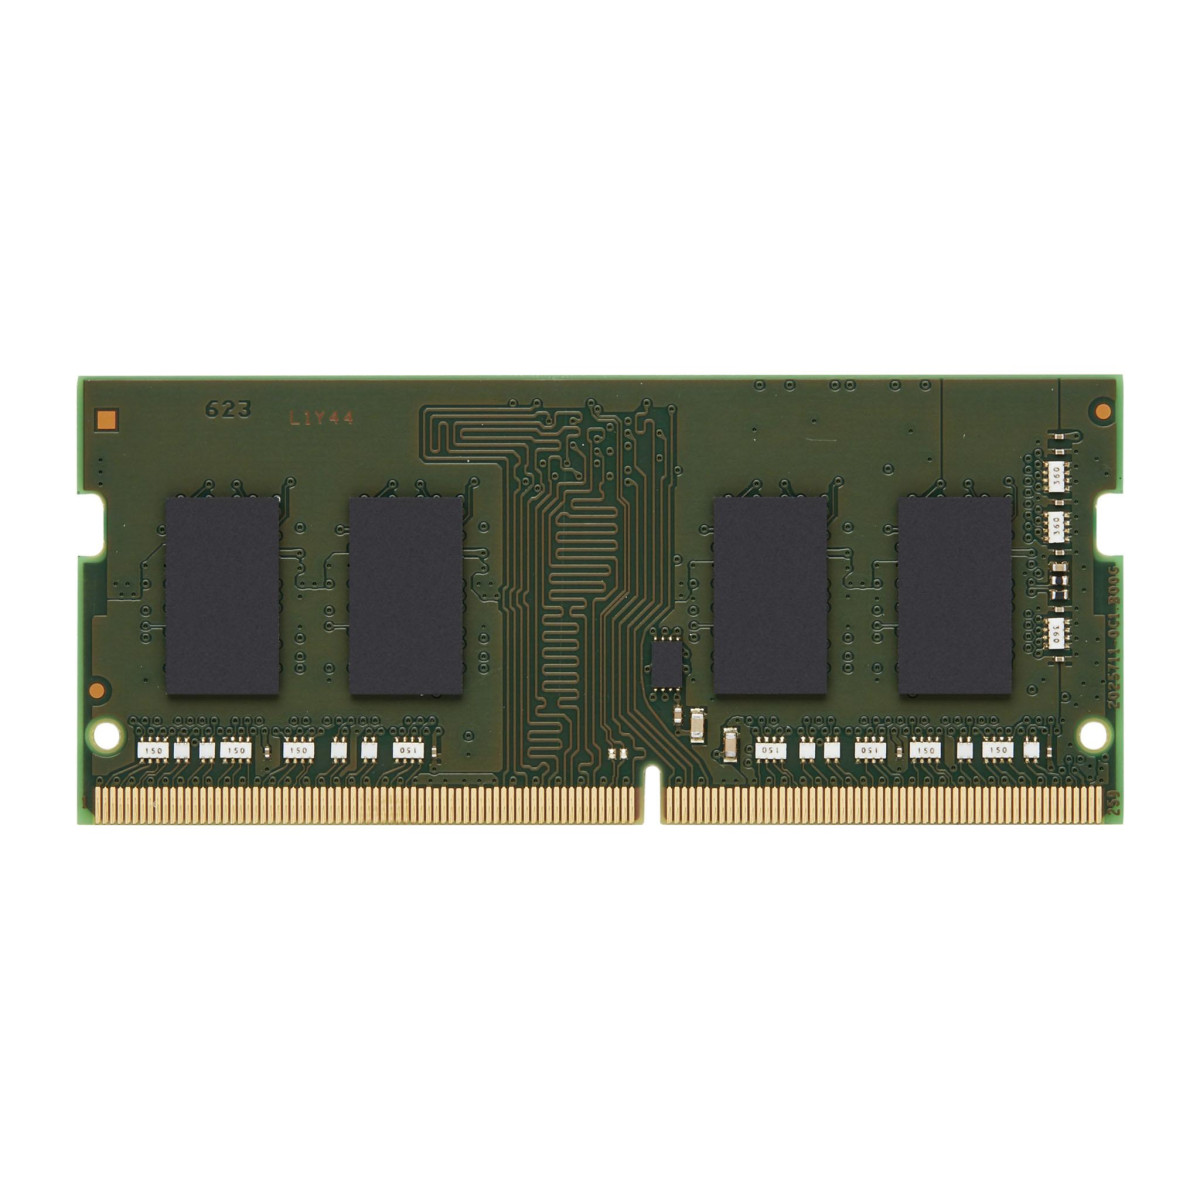 8GB DDR4 2666MHz Single Rank SODIMM